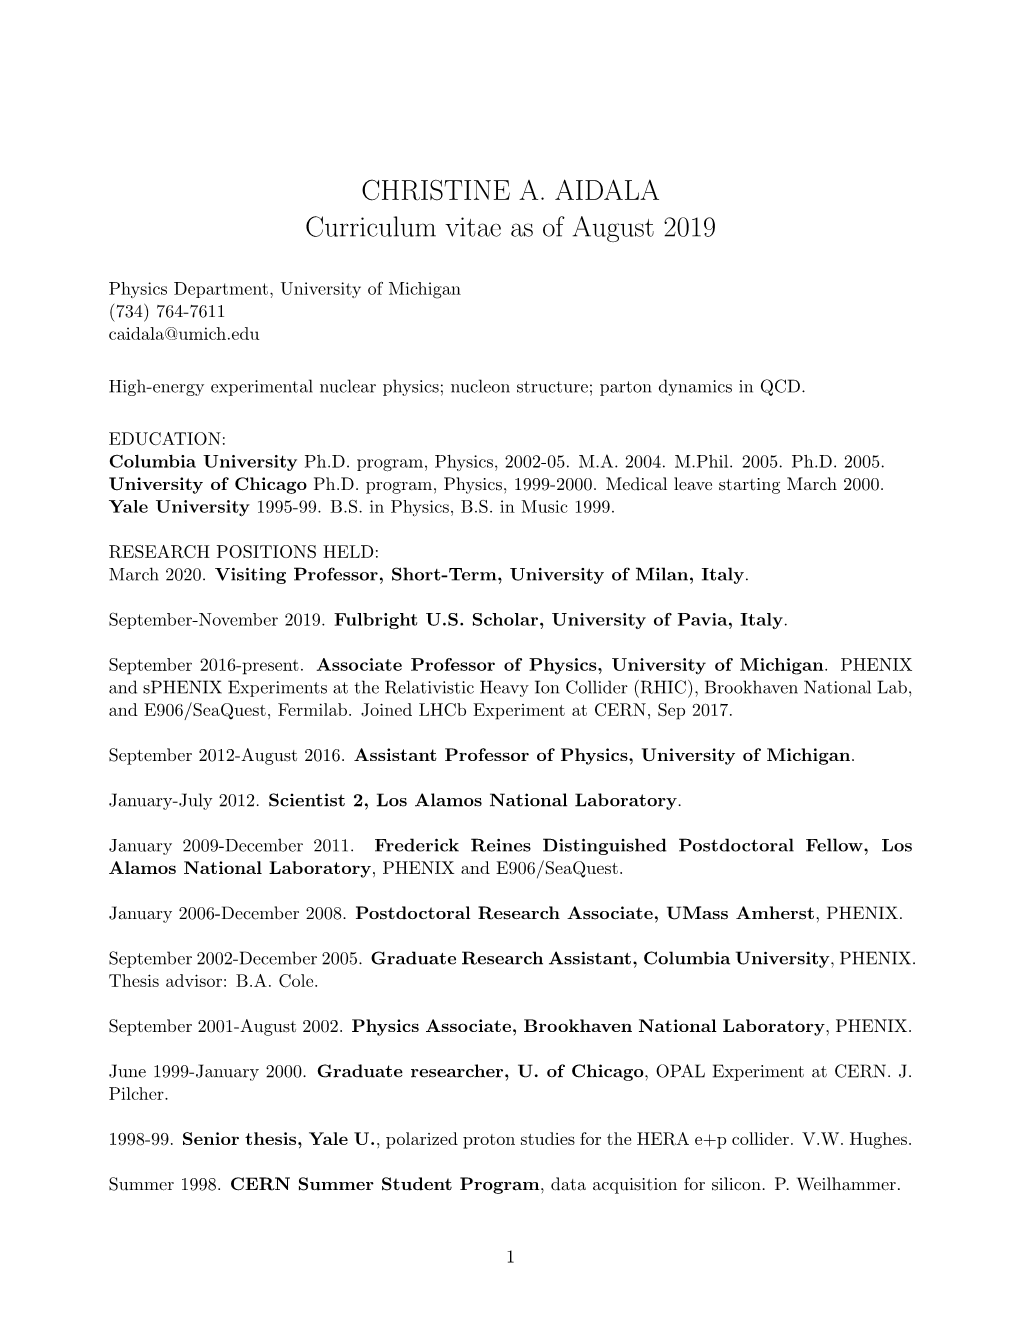 CHRISTINE A. AIDALA Curriculum Vitae As of August 2019